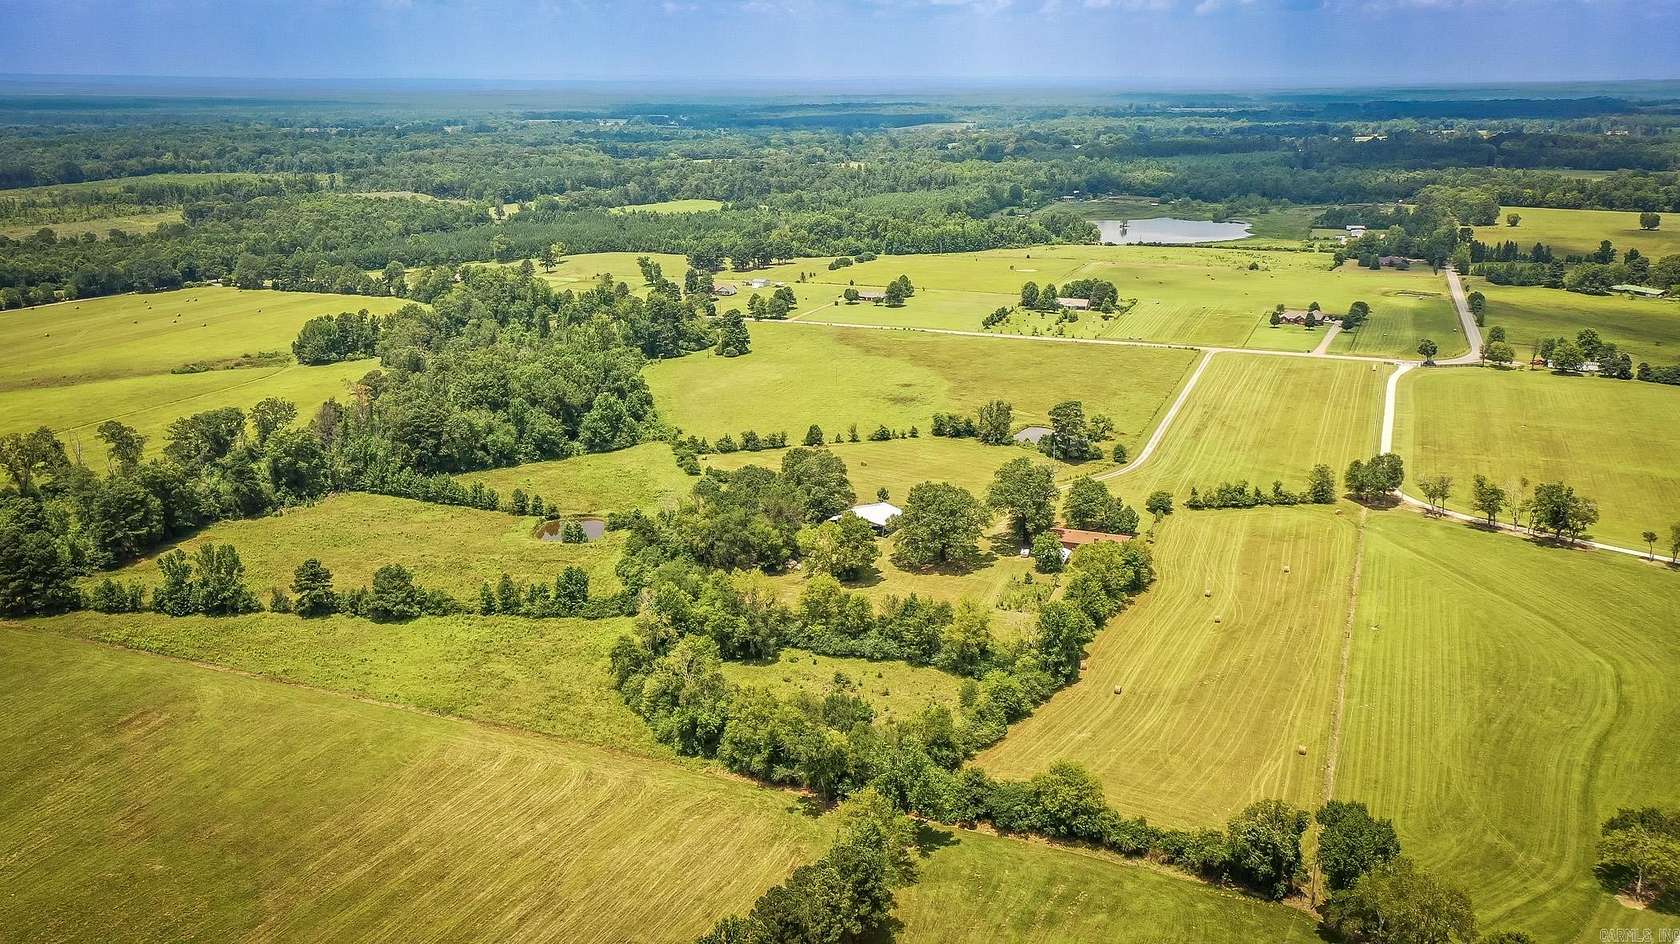 40 Acres of Land with Home for Sale in Arkadelphia, Arkansas